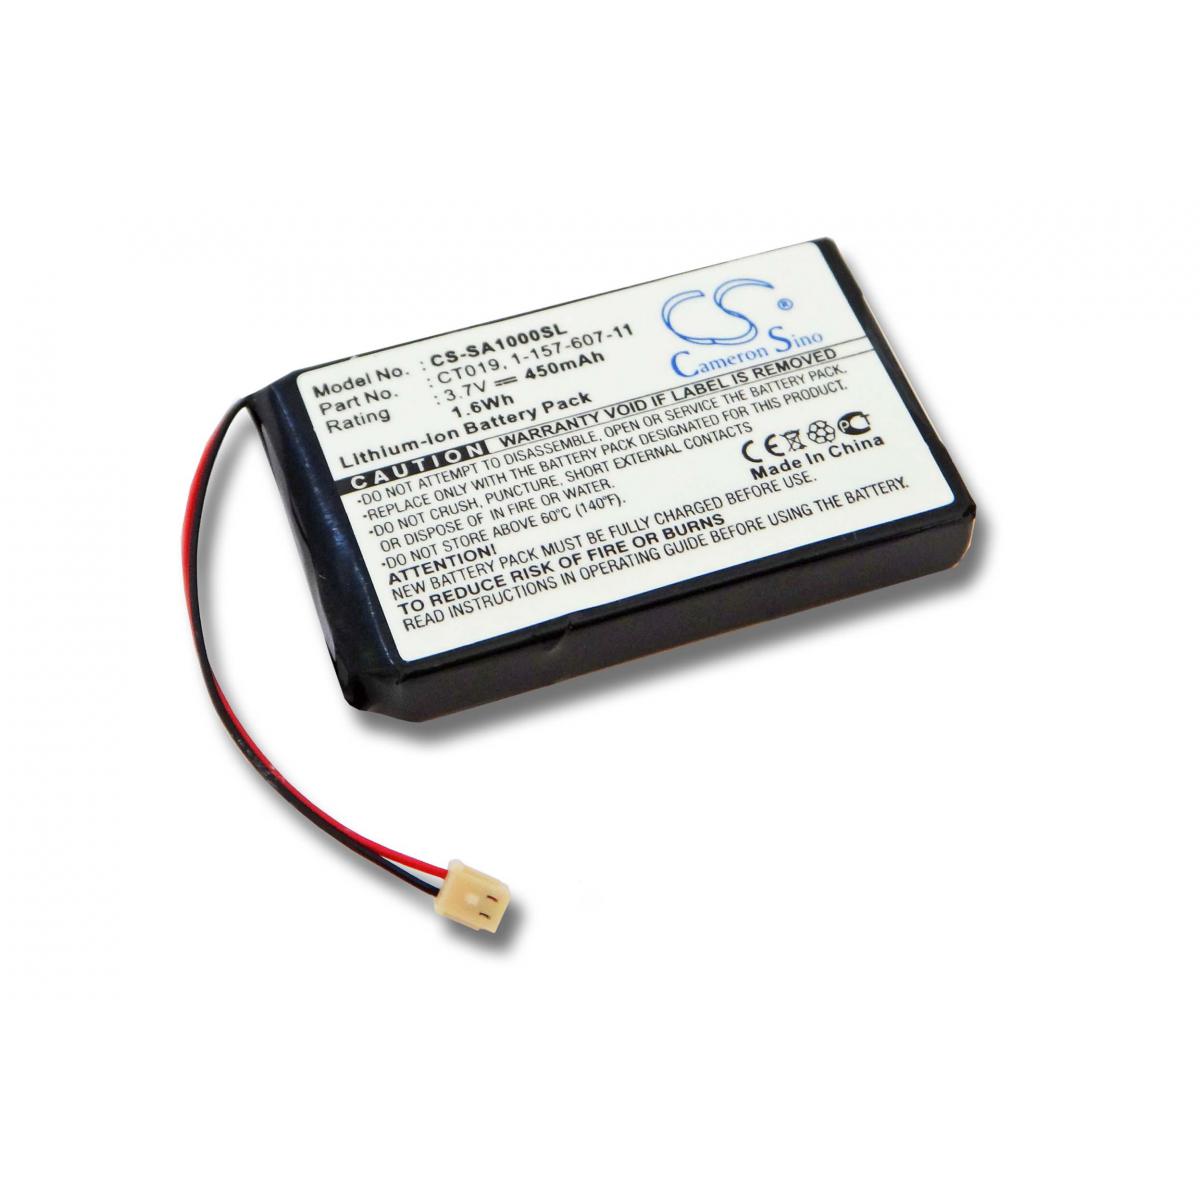 Vhbw - Batterie Li-Ion 450 mAh pour SONY MP3-PLAYER NW-A1000 NW-A12000 NW-A 1000 1200 - Batteries électroniques